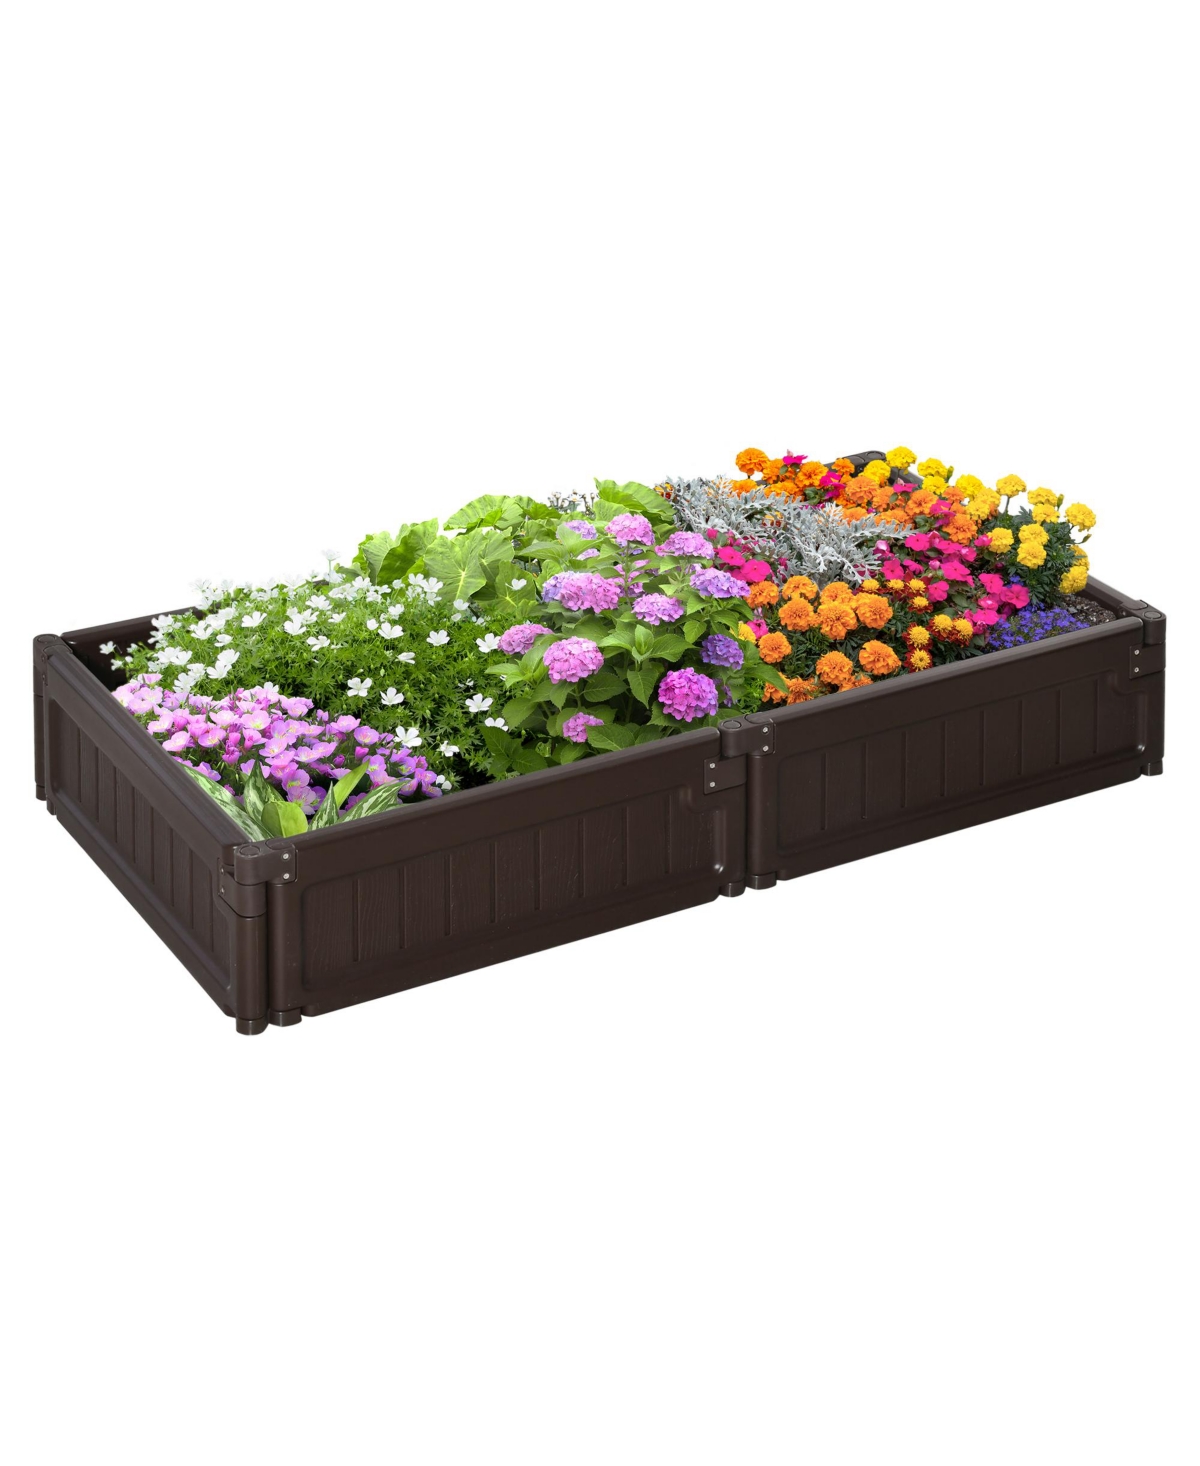 4' x 2' Raised Garden Bed, Plastic Open Planter Box, Brown - Brown